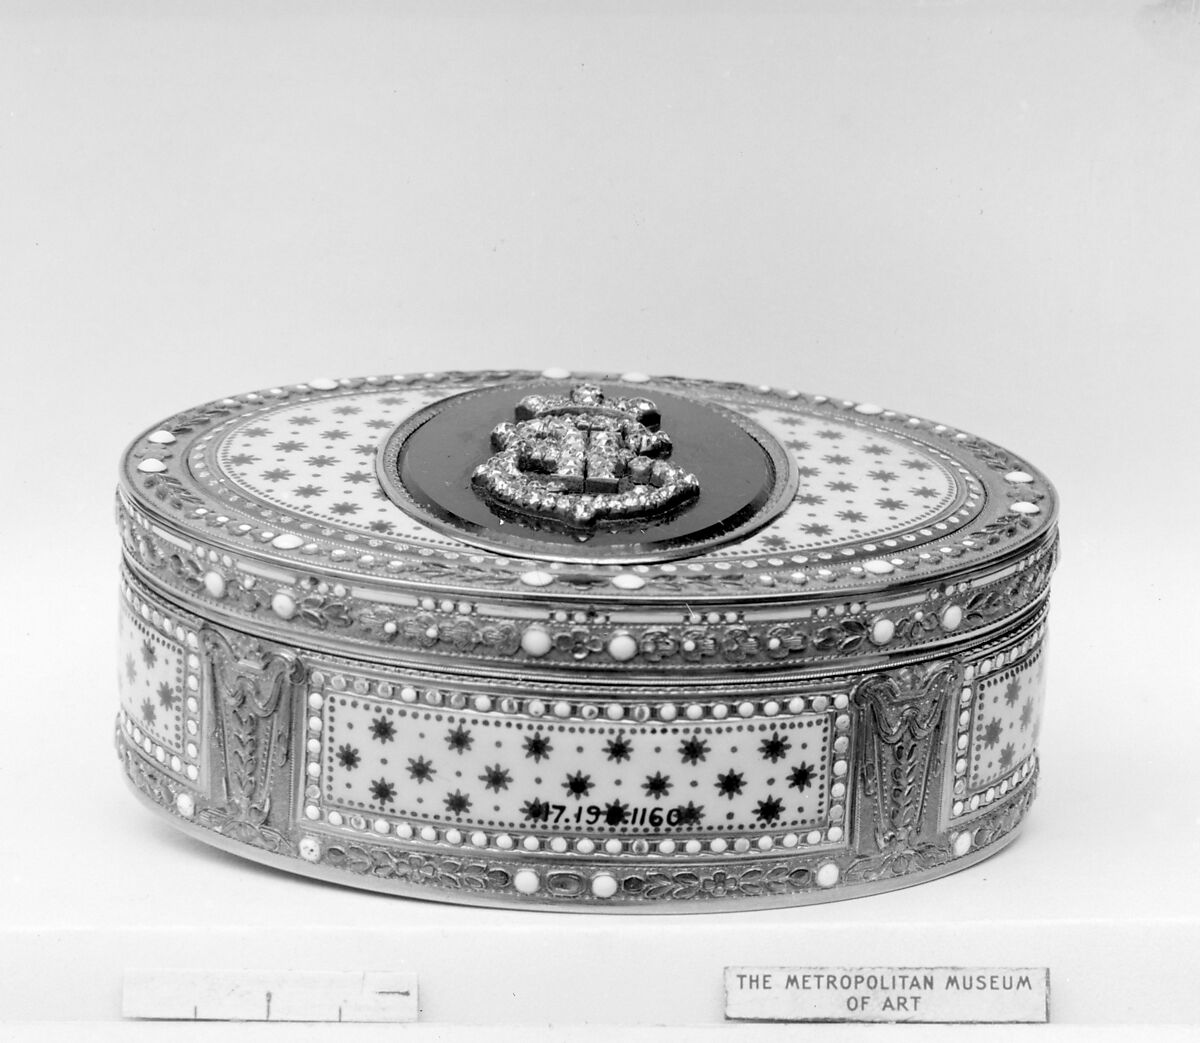 Snuffbox, Jean-Joseph Barrière (French, apprenticed 1750, master 1763, active 1793), Gold, enamel, diamonds, glass, French, Paris 